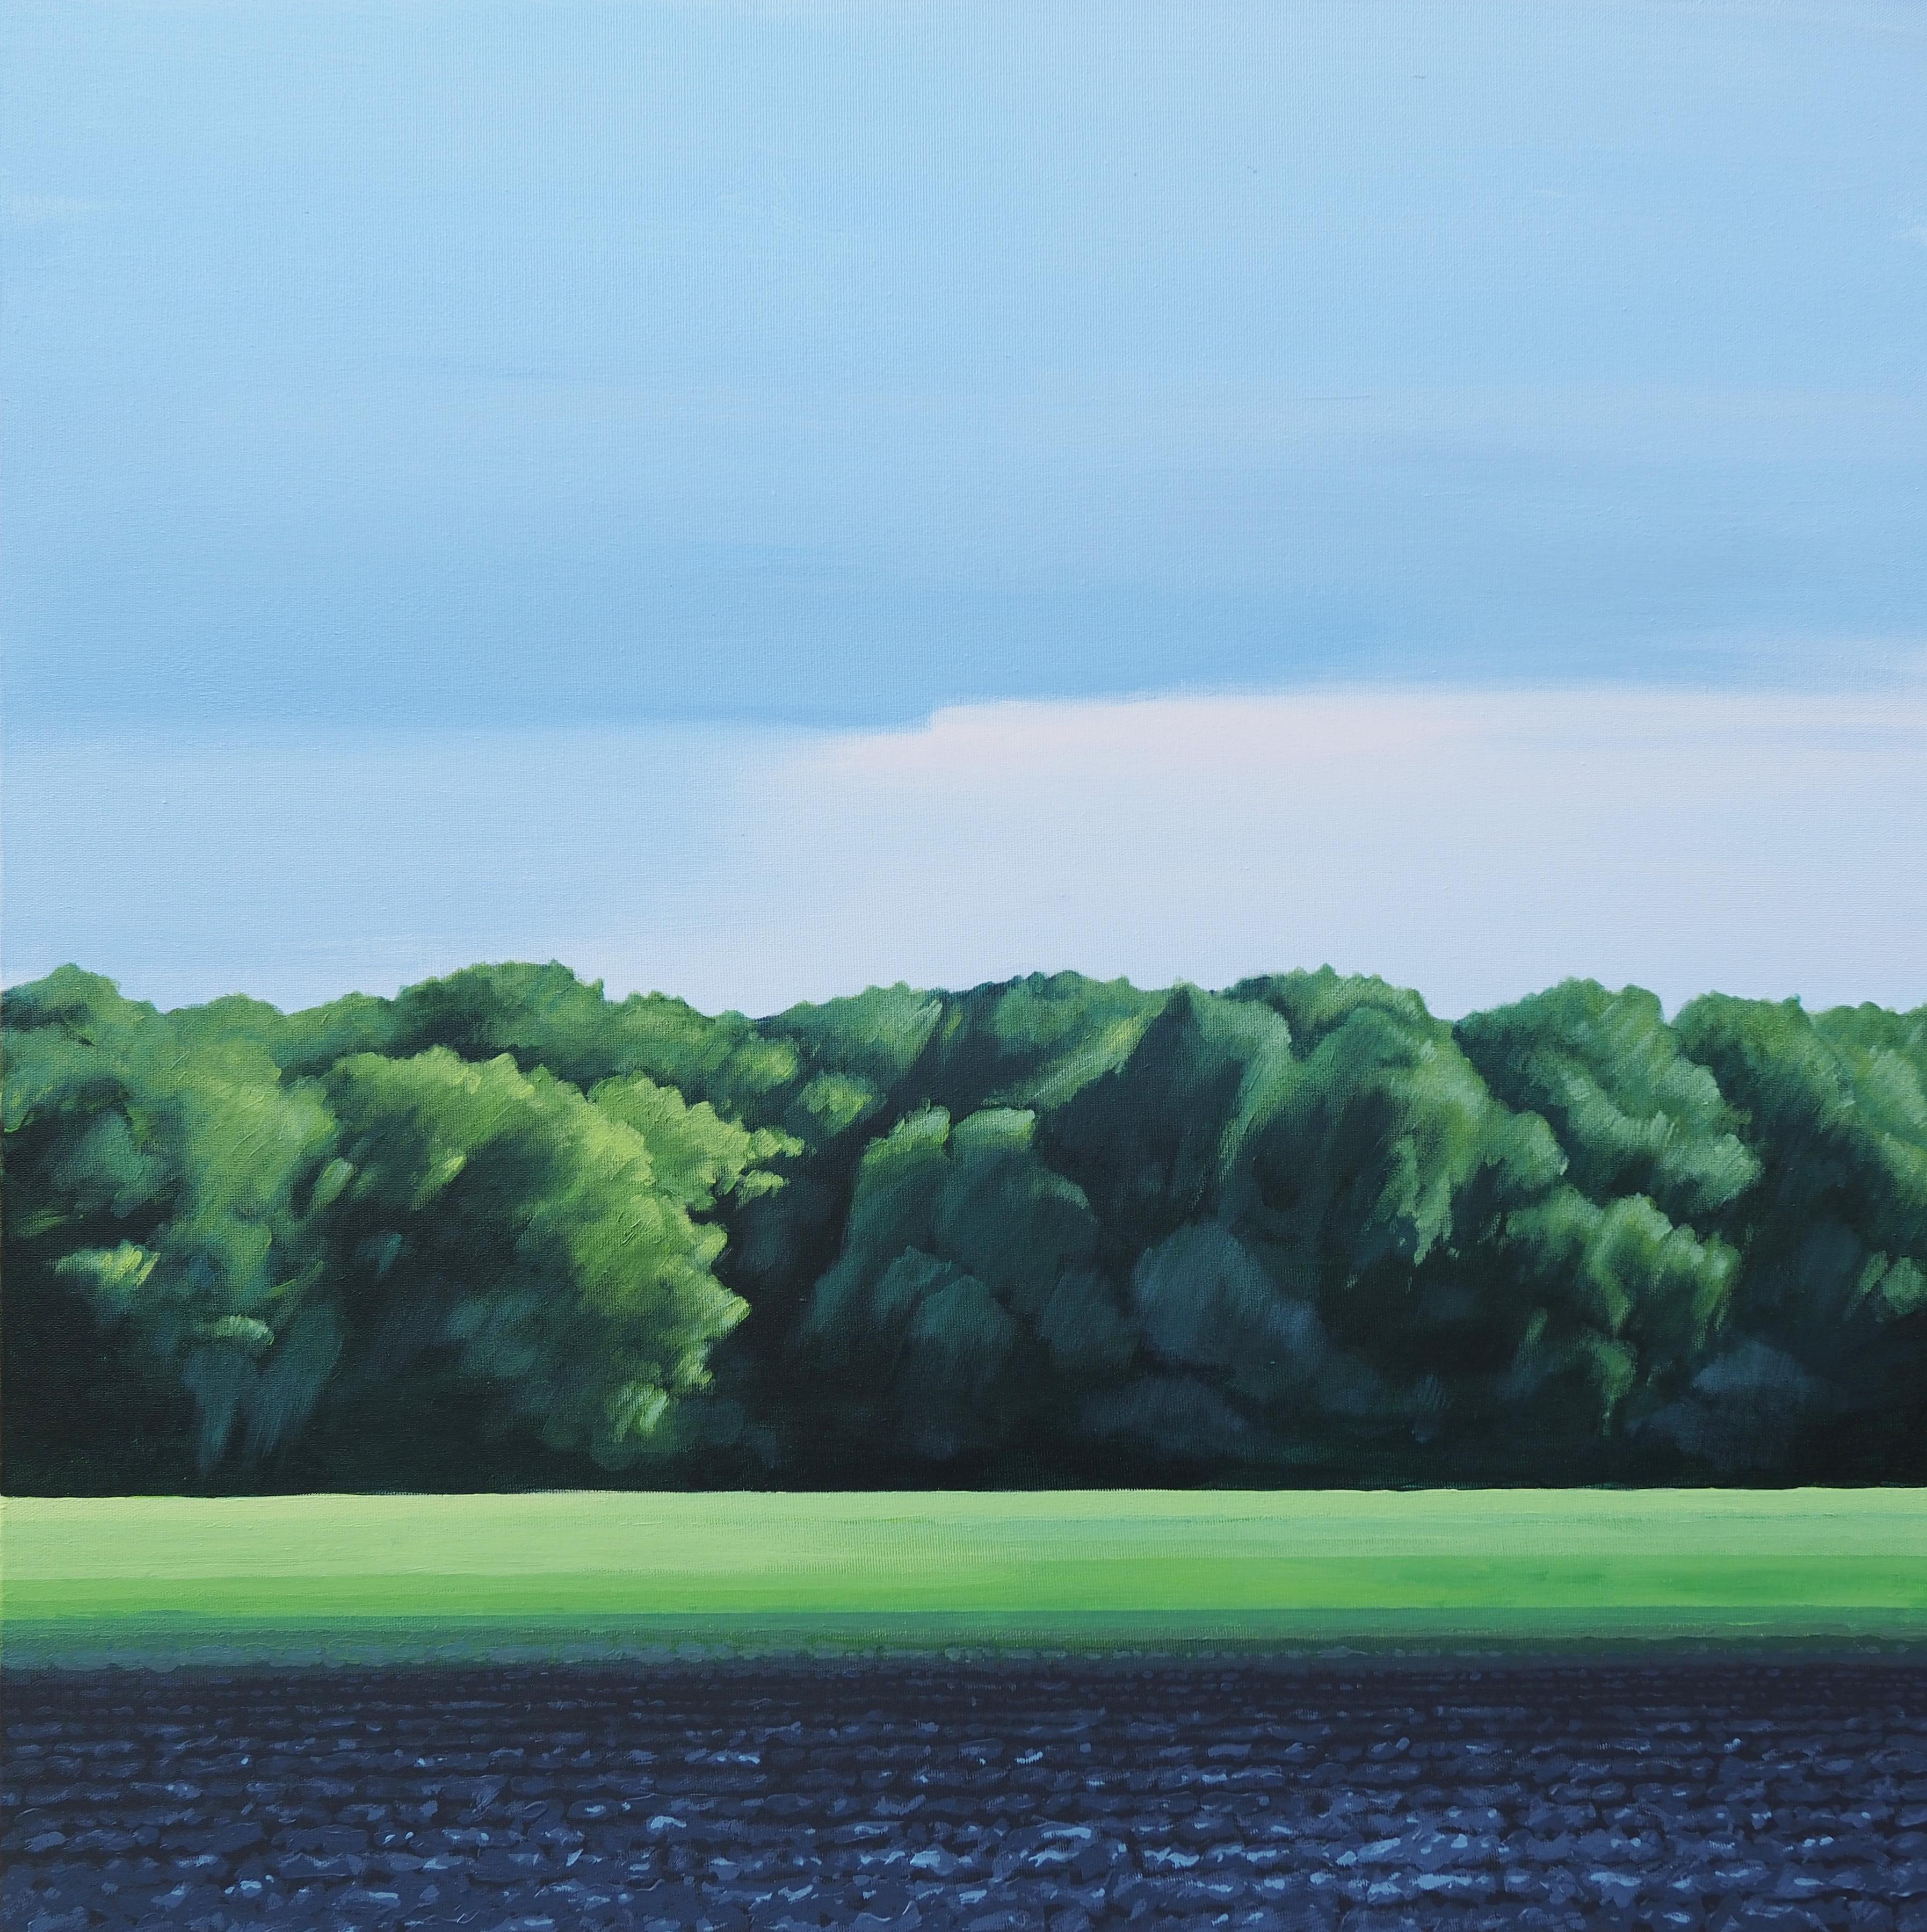 Grzegorz Wójcik Figurative Painting - Landscape VII - Contemporary Atmospheric and Modern Lake, Seascape Painting